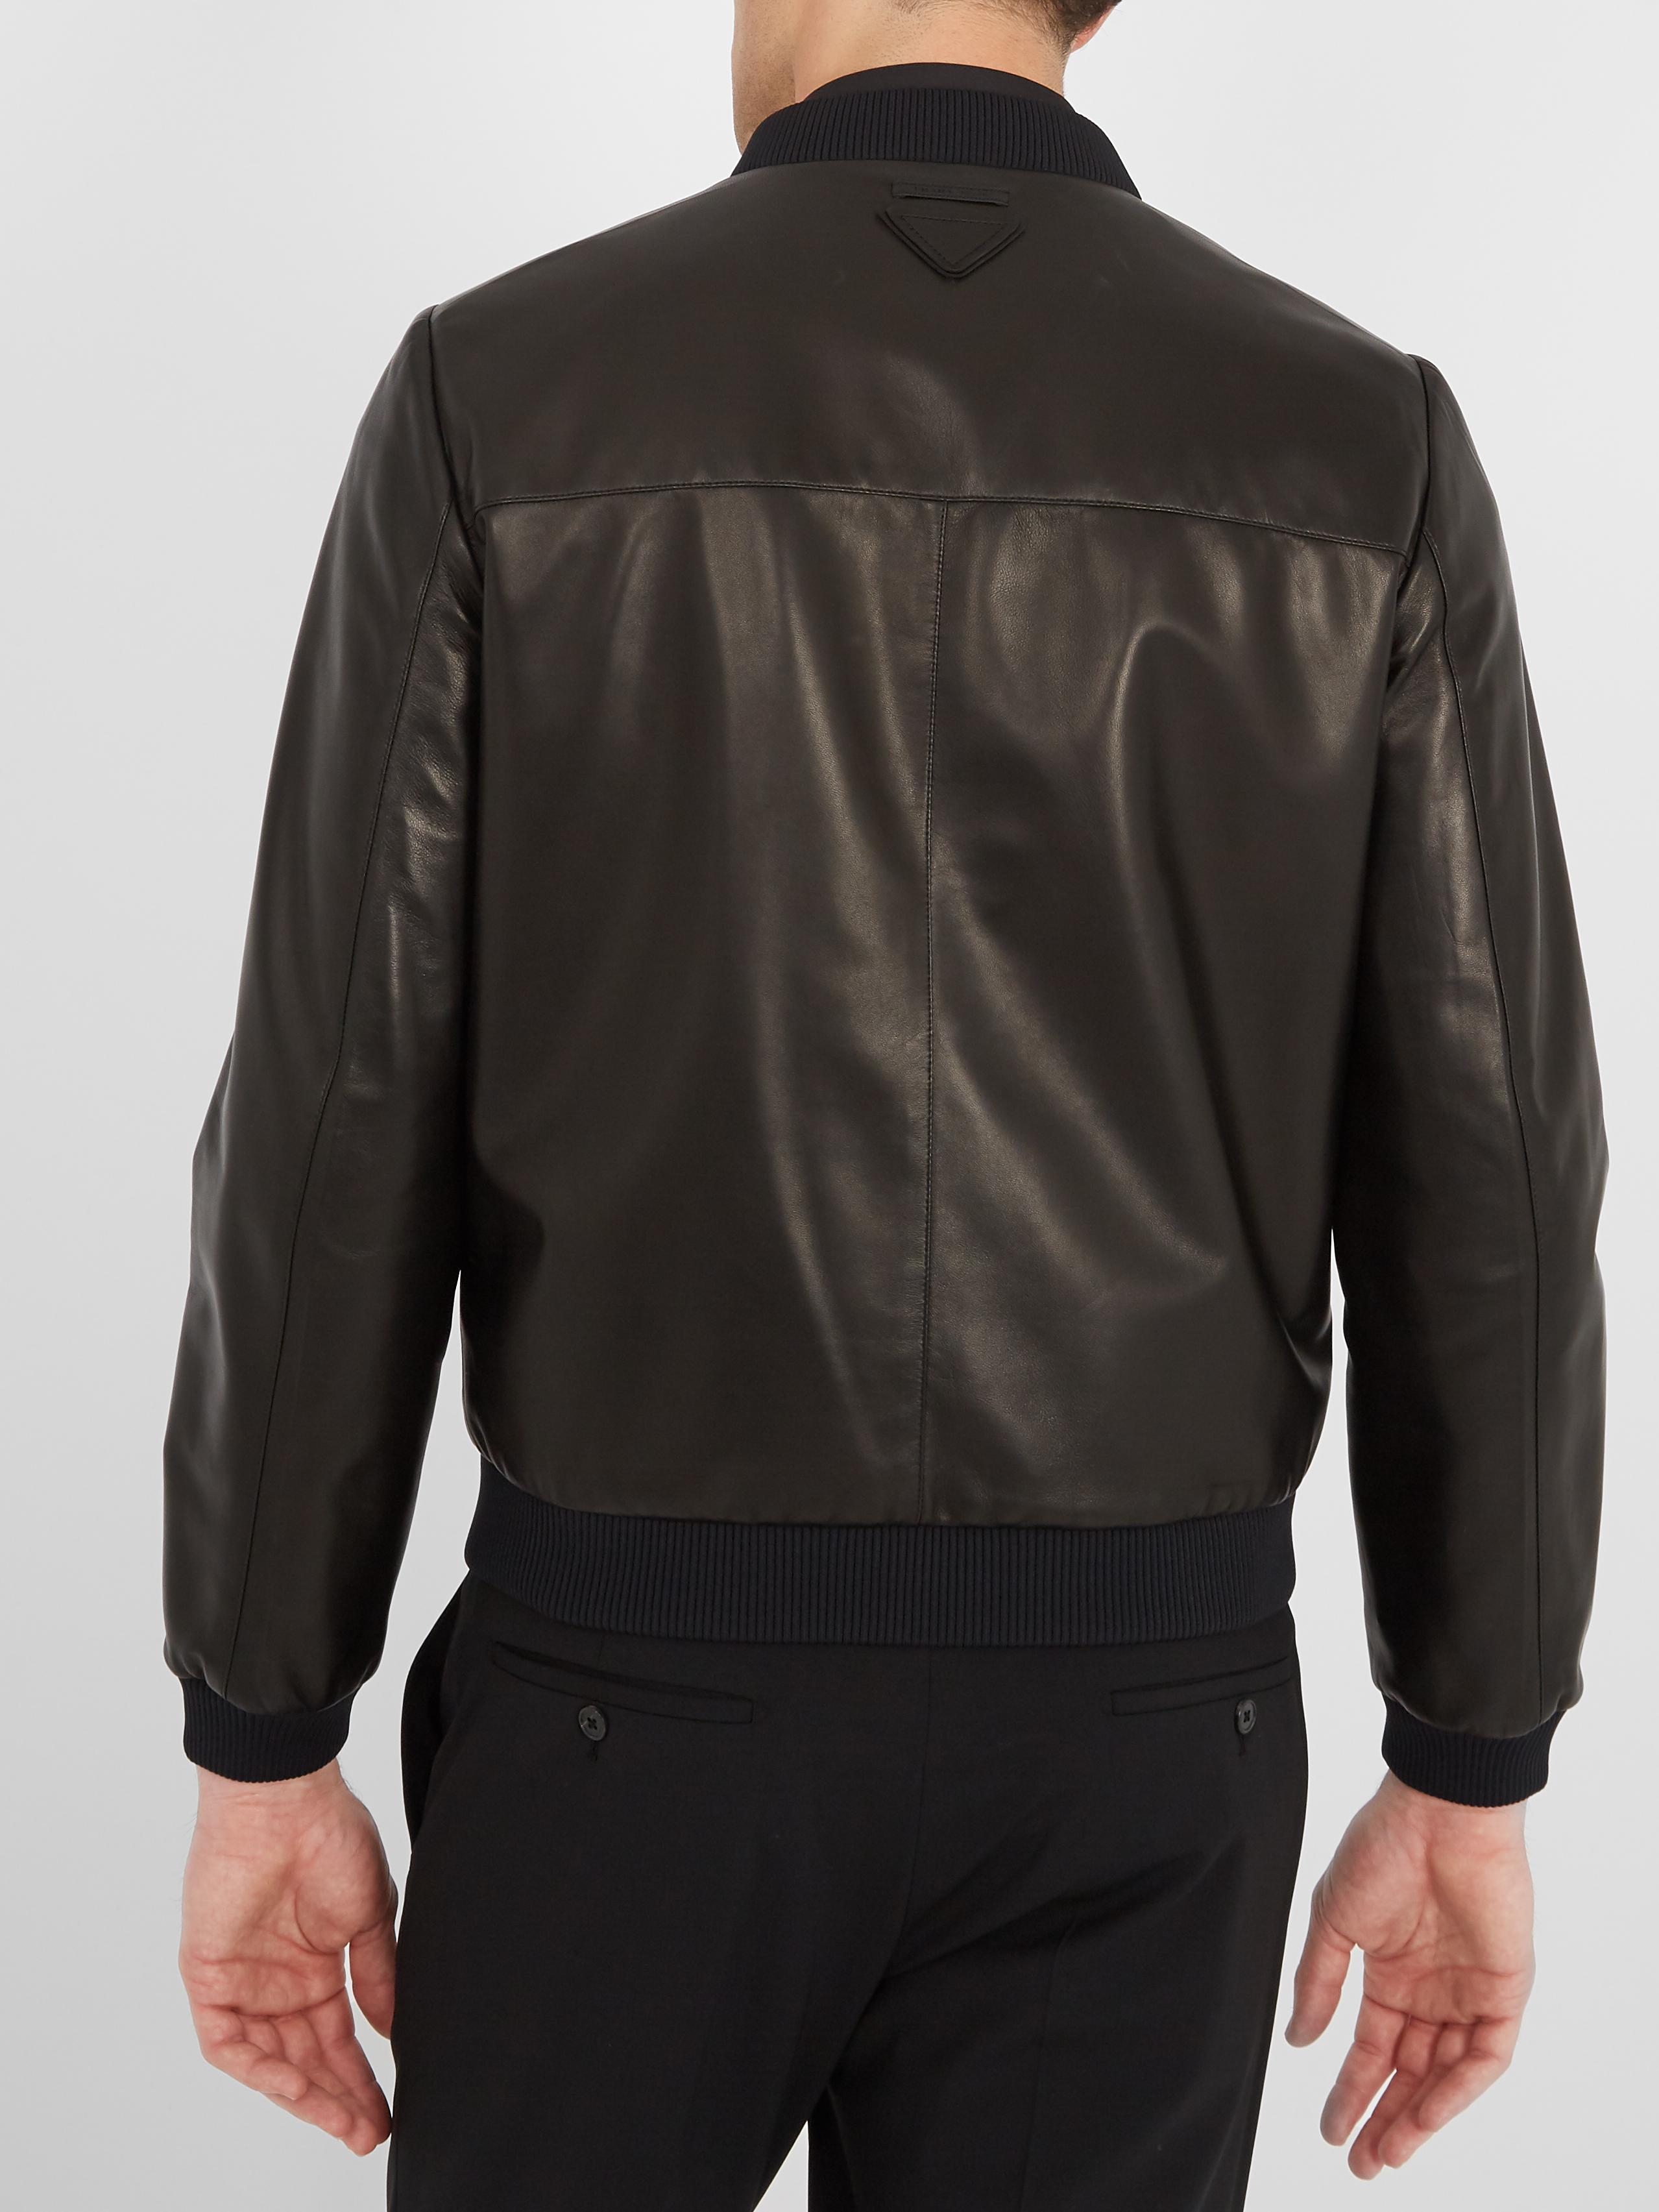 Prada Leather Bomber Jacket in Black for Men - Lyst